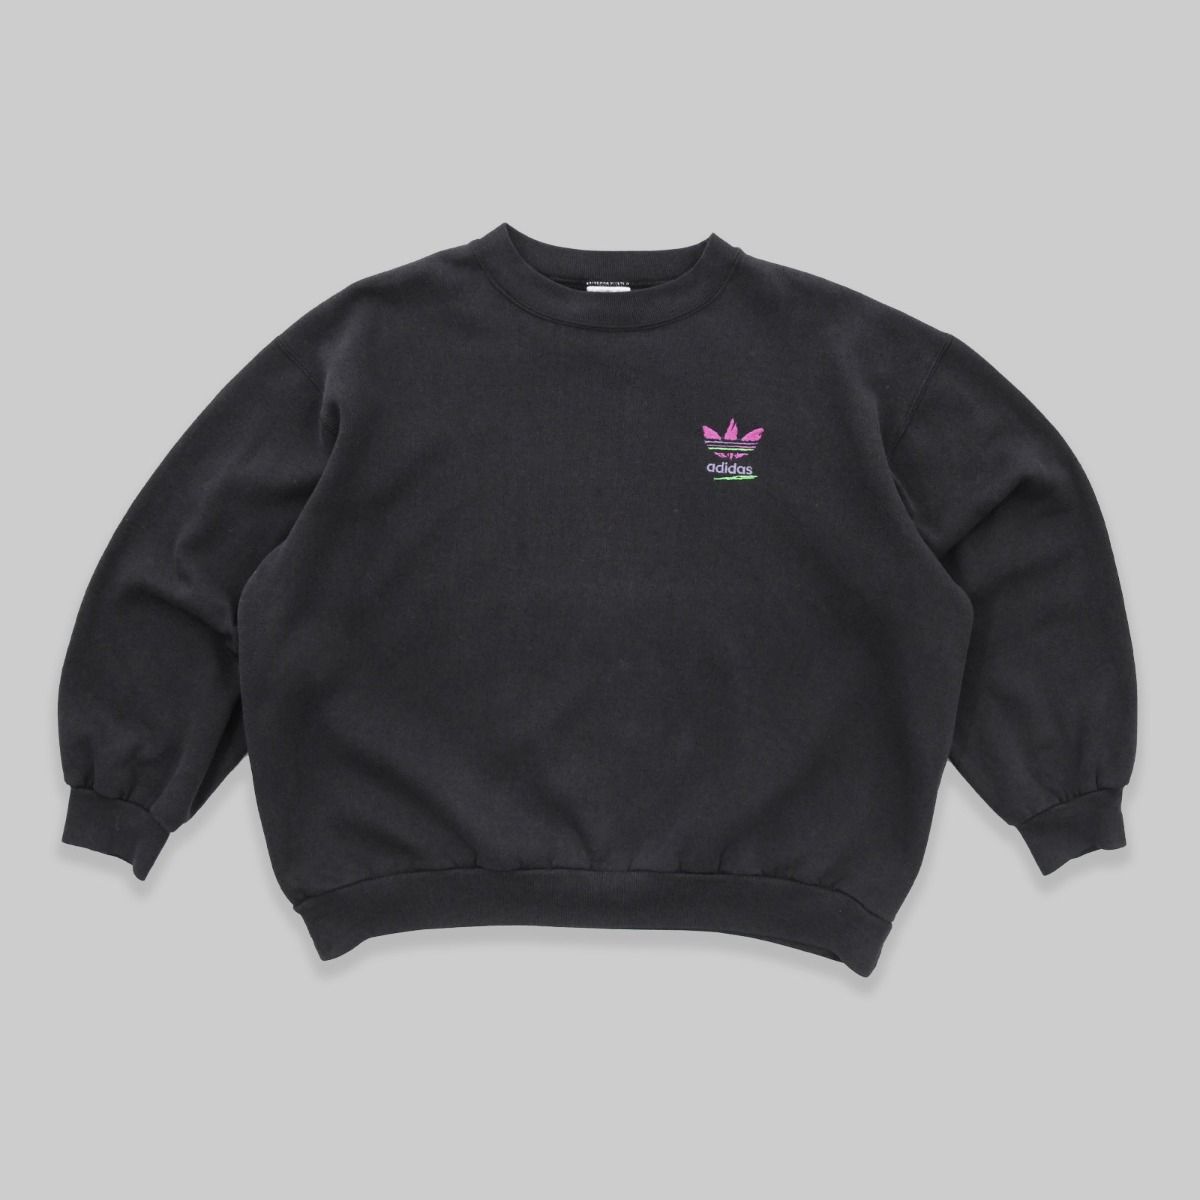 Adidas Early 1990s Sweatshirt